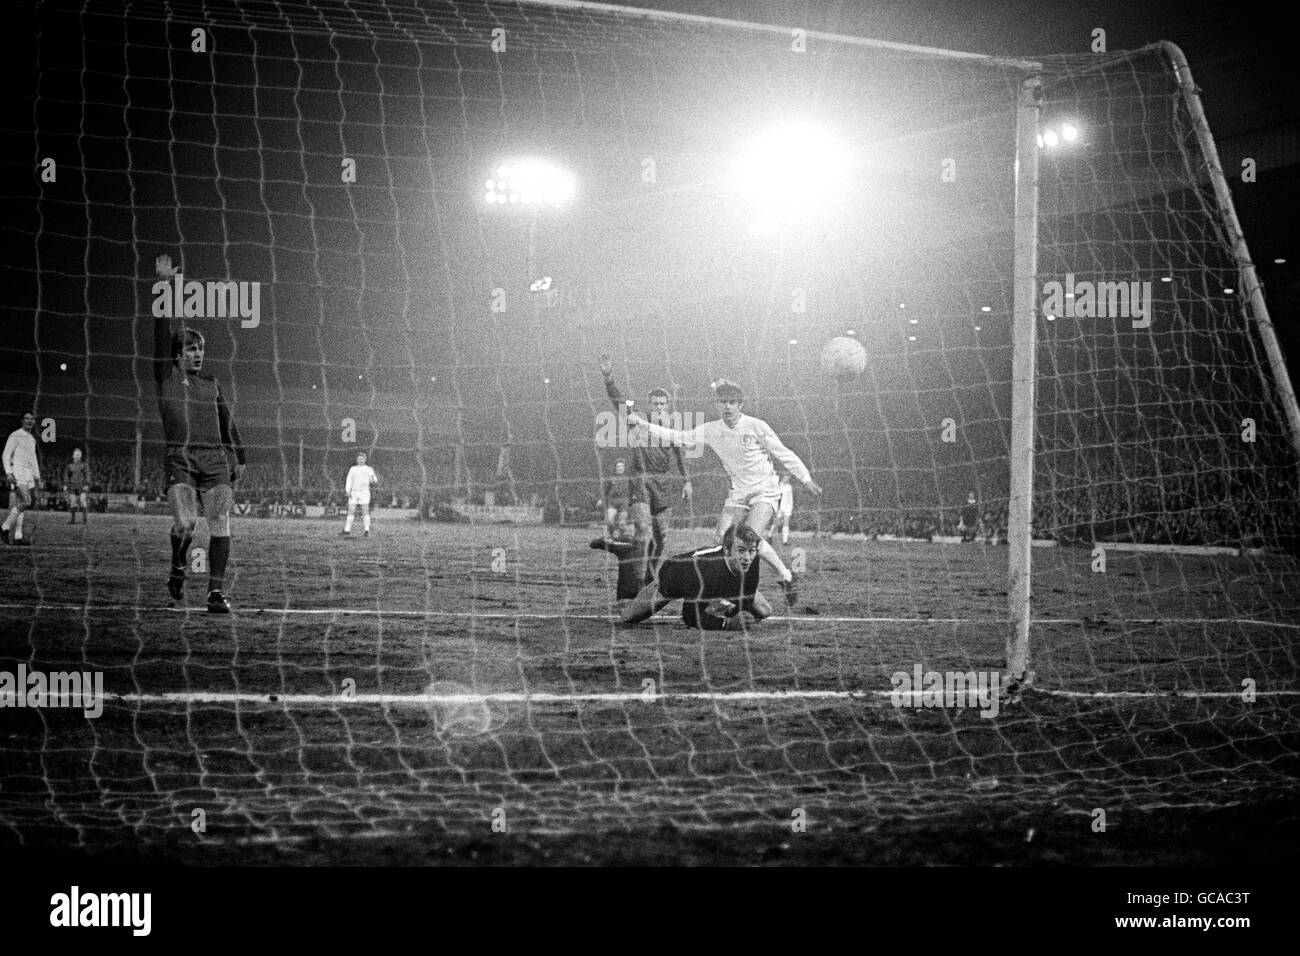 Soccer - European Cup - Quarter Finals - Leeds United v Standard Liege - Elland Road - 1970 Stock Photo